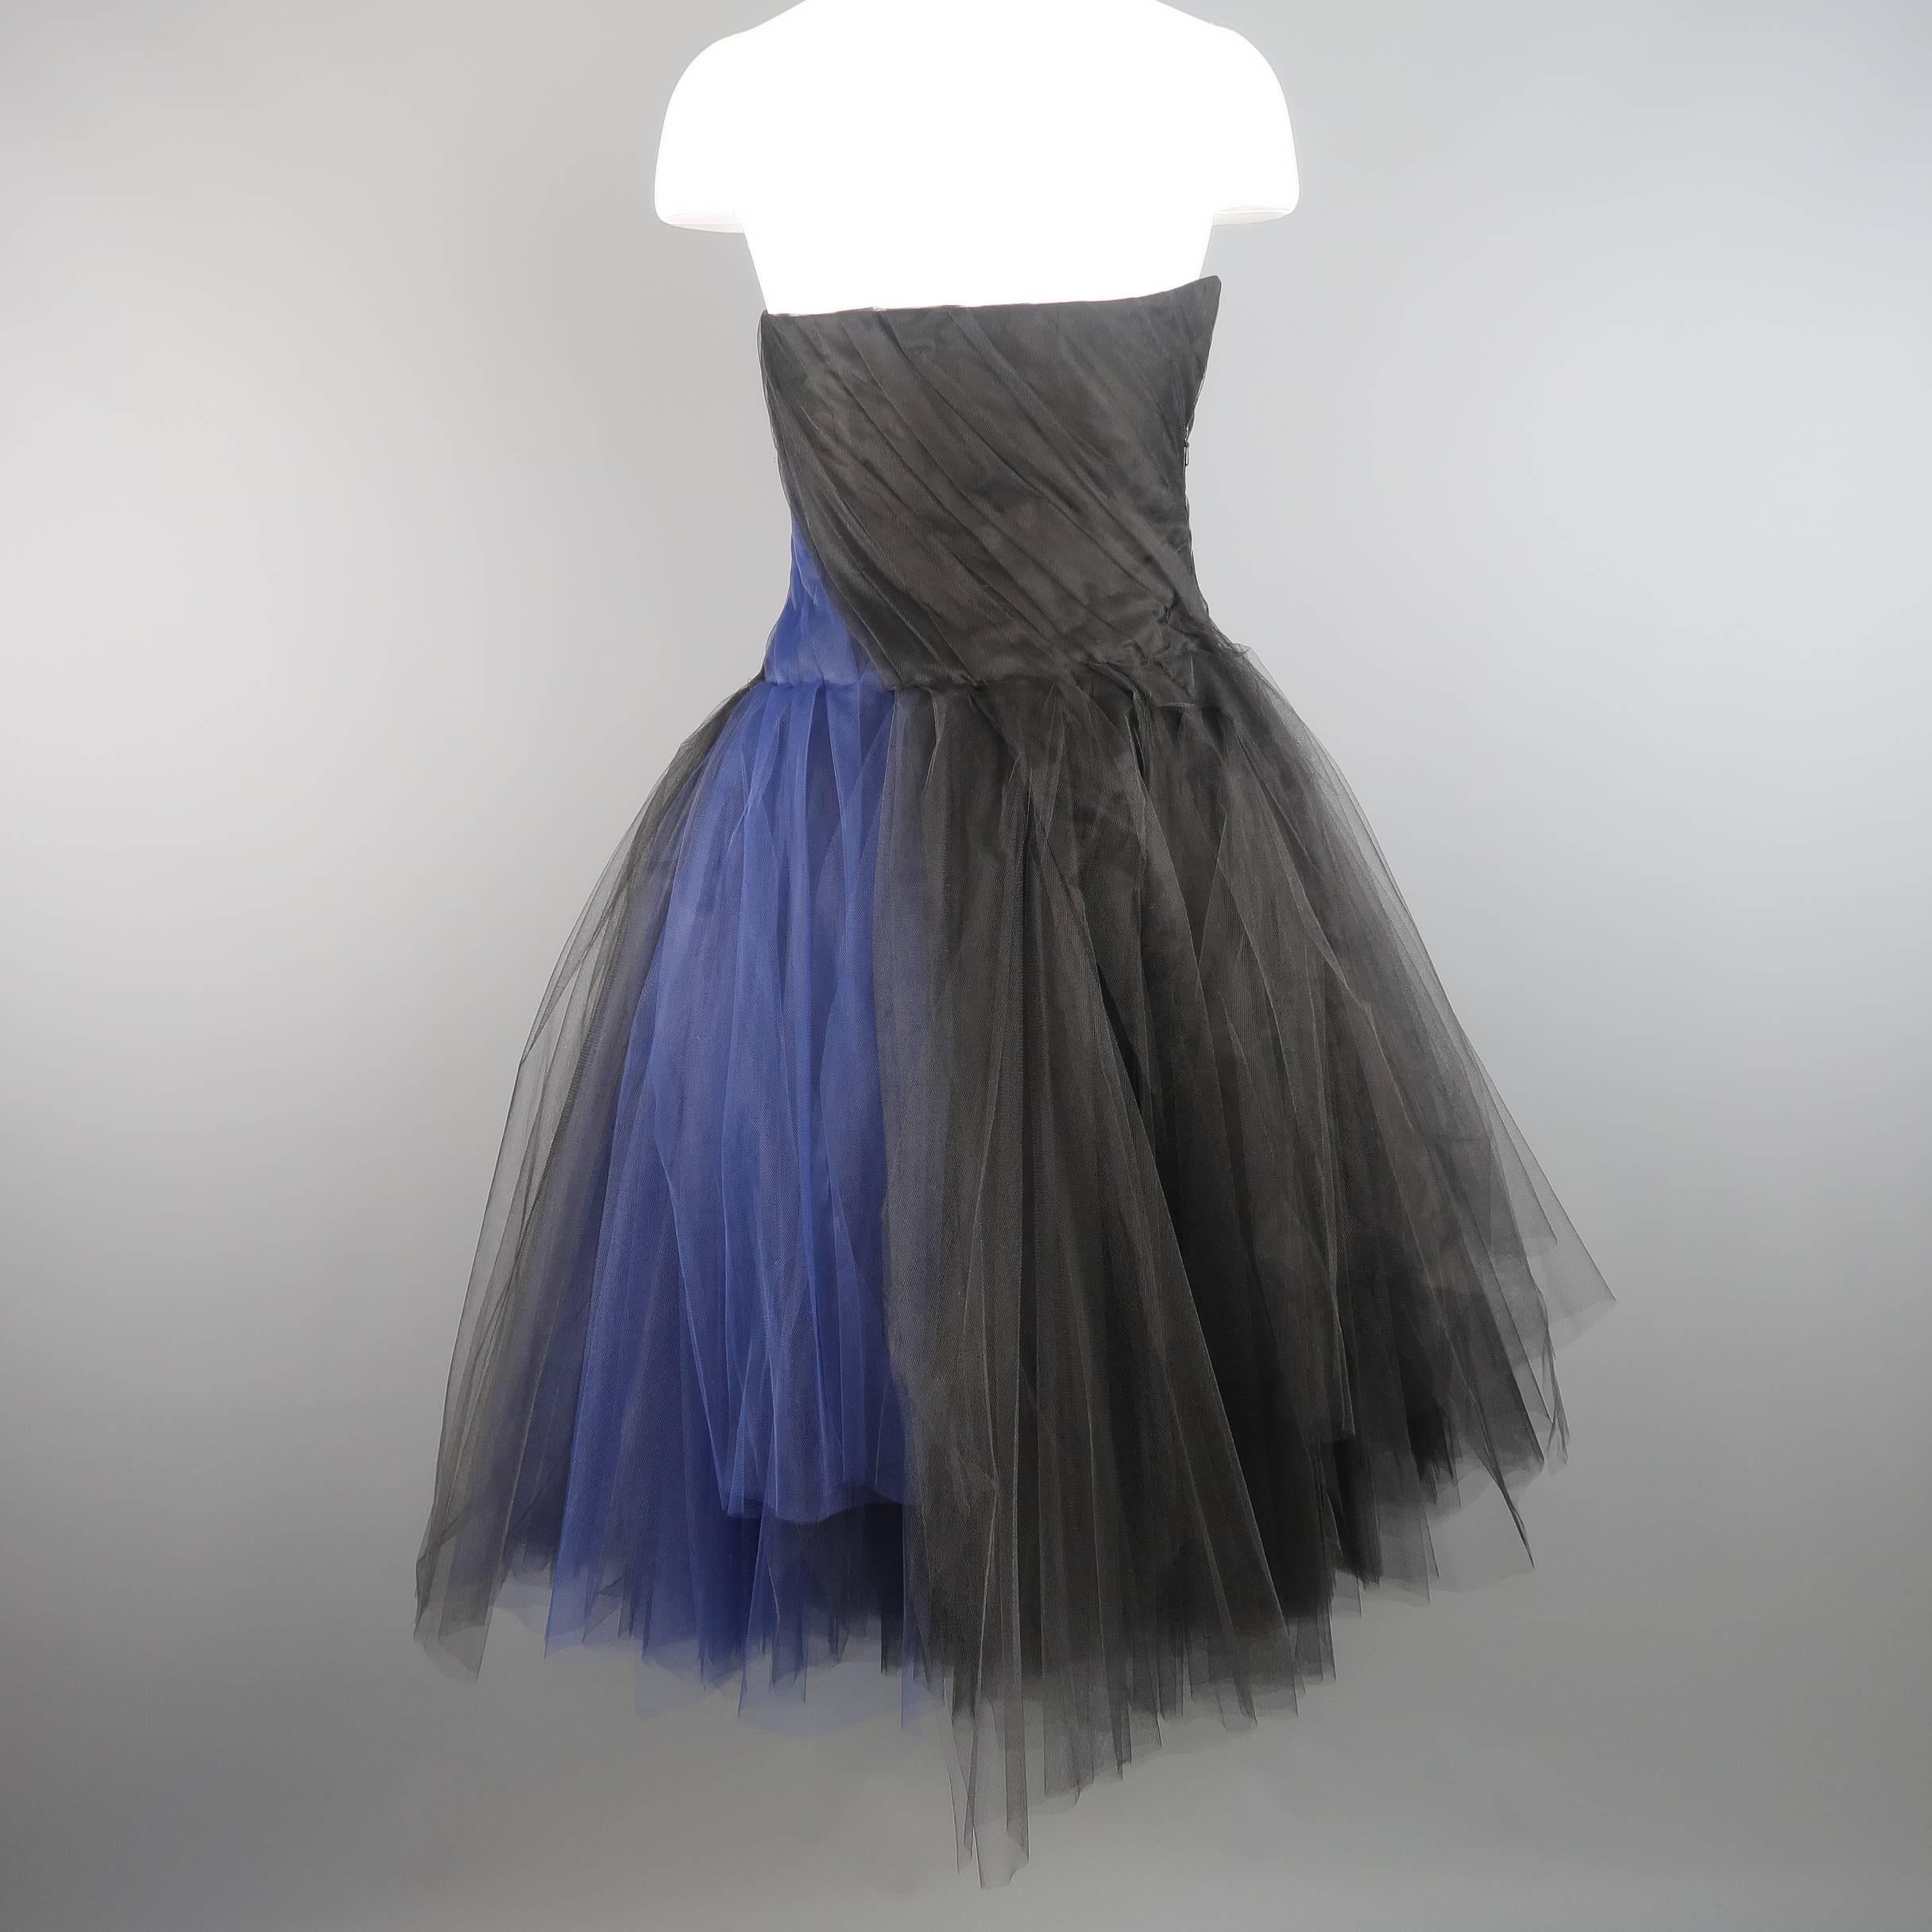 Women's Oscar de la Renta Dress - Black and Blue Tulle Bustier Cocktail 